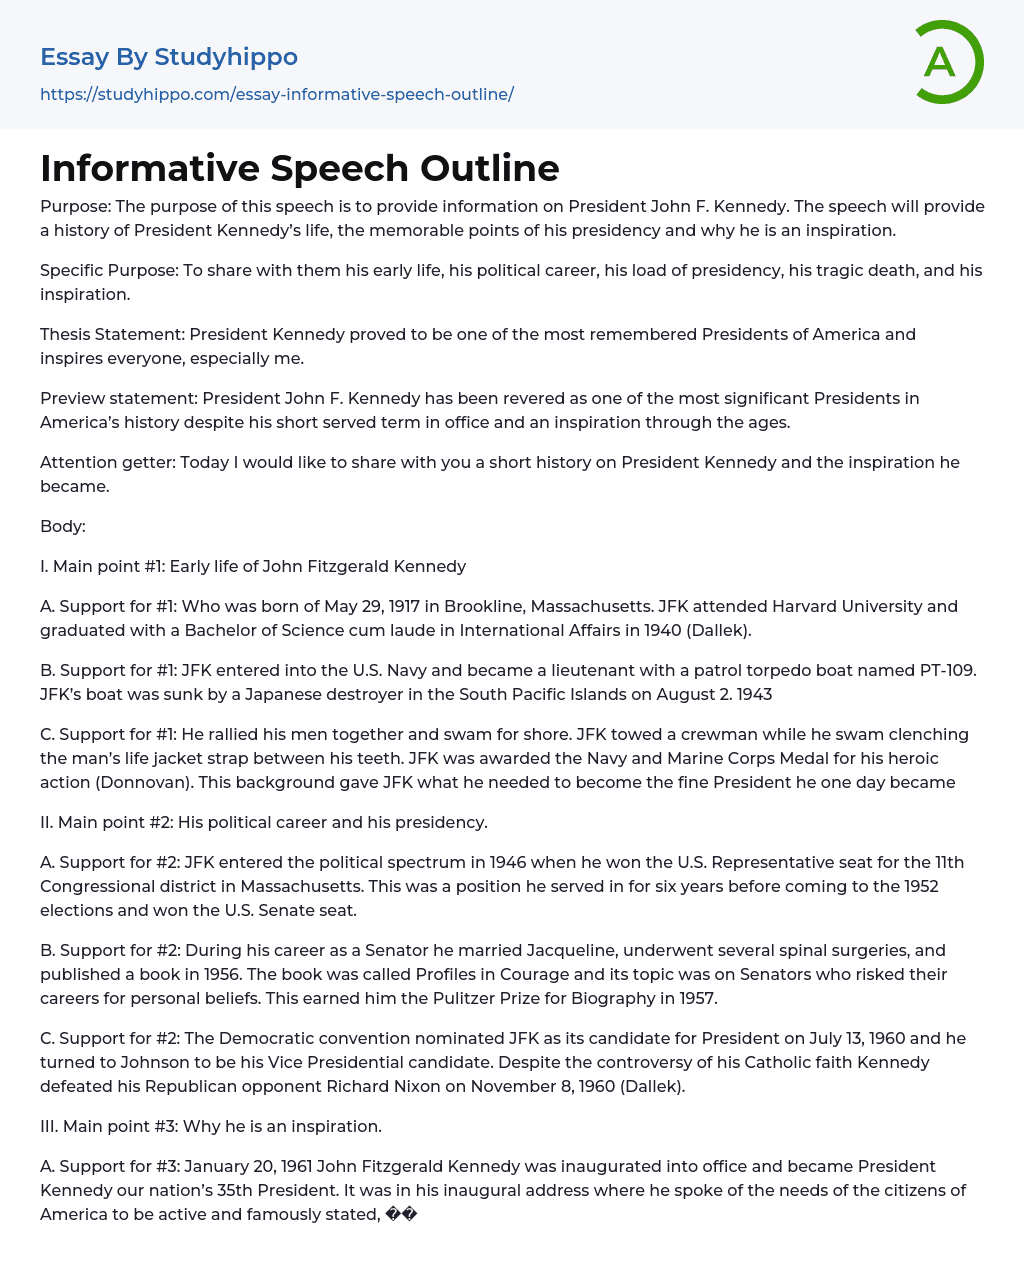 Informative Speech Outline Essay Example